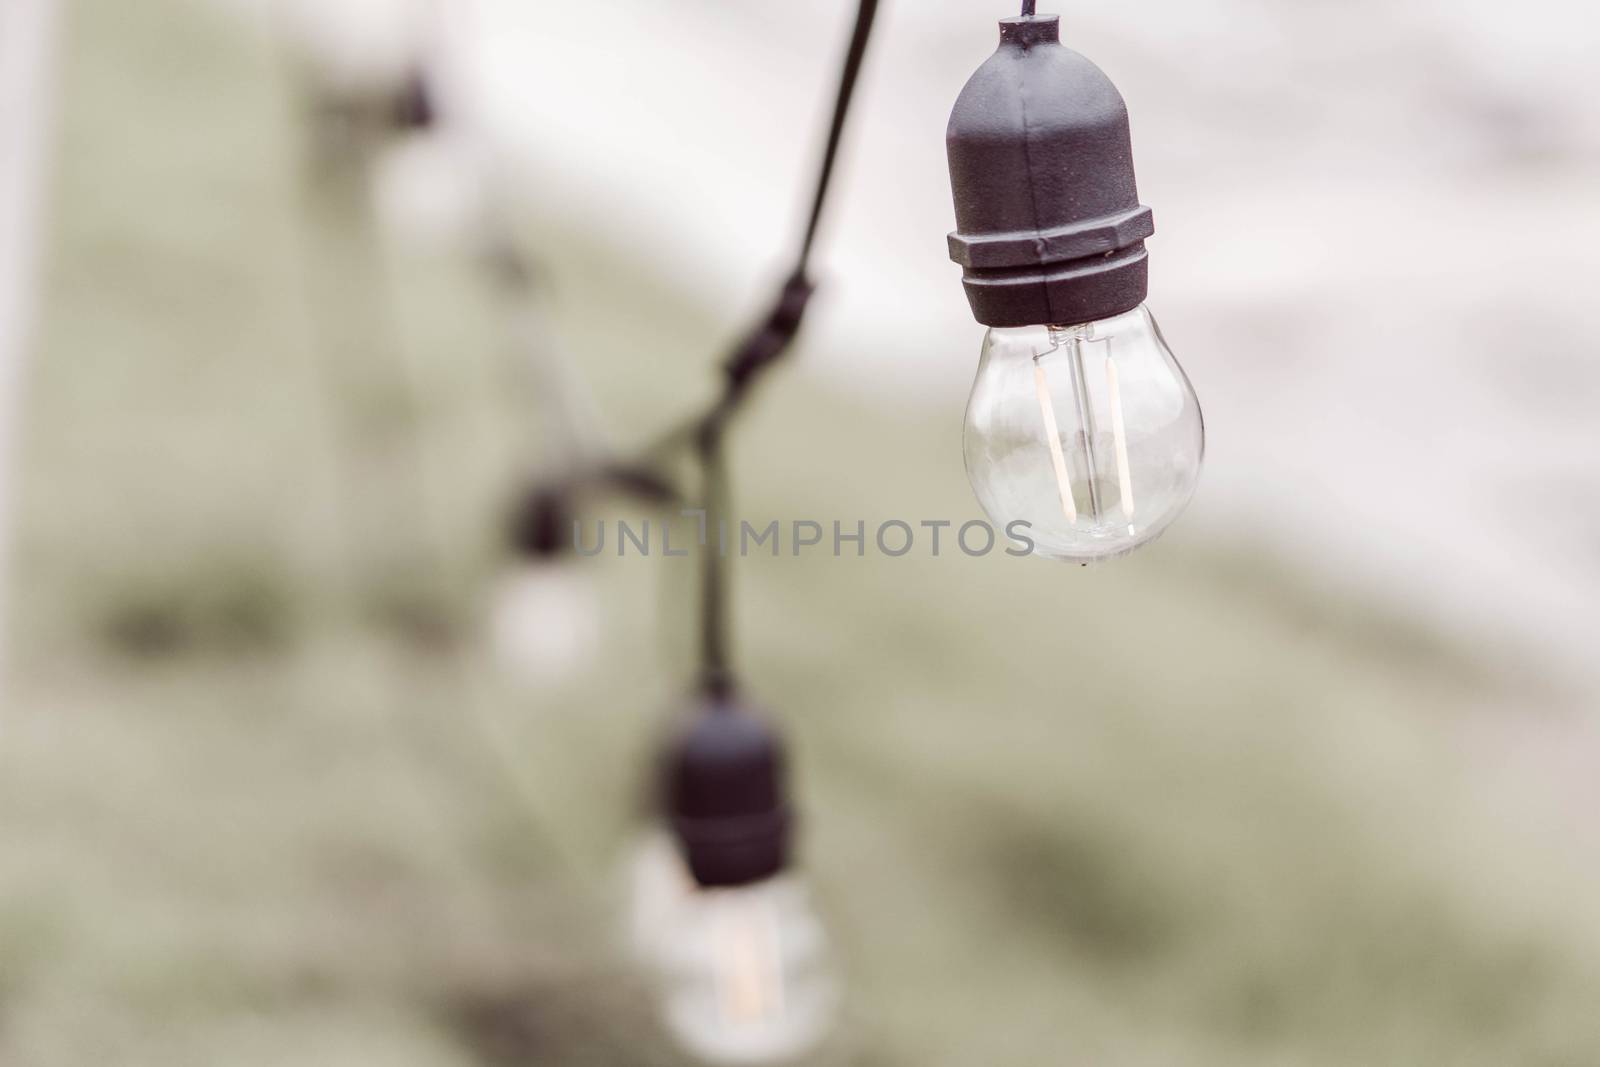 Light bulb on the green garden by pt.pongsak@gmail.com